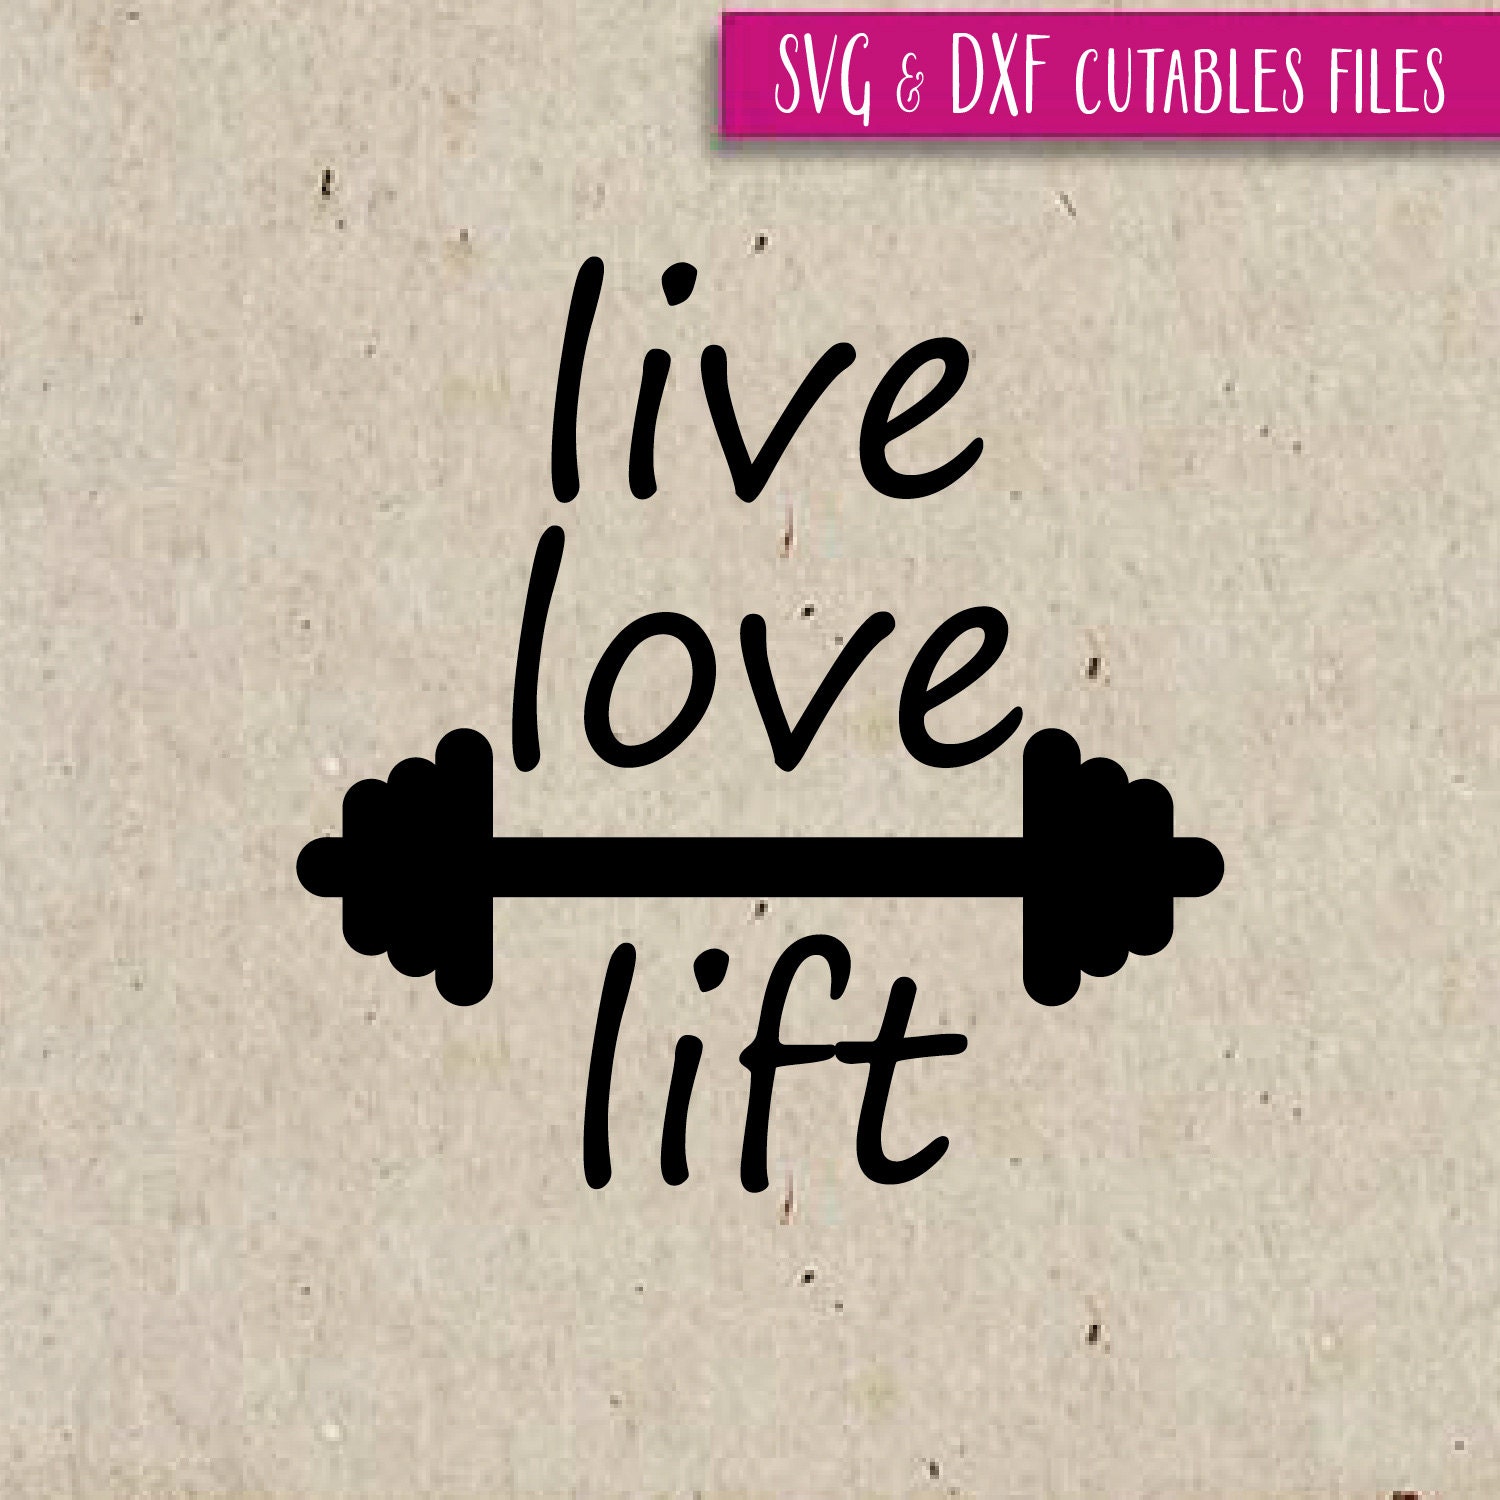 Download Live love lift SVG.DXF Cut File Silhouette Cricut